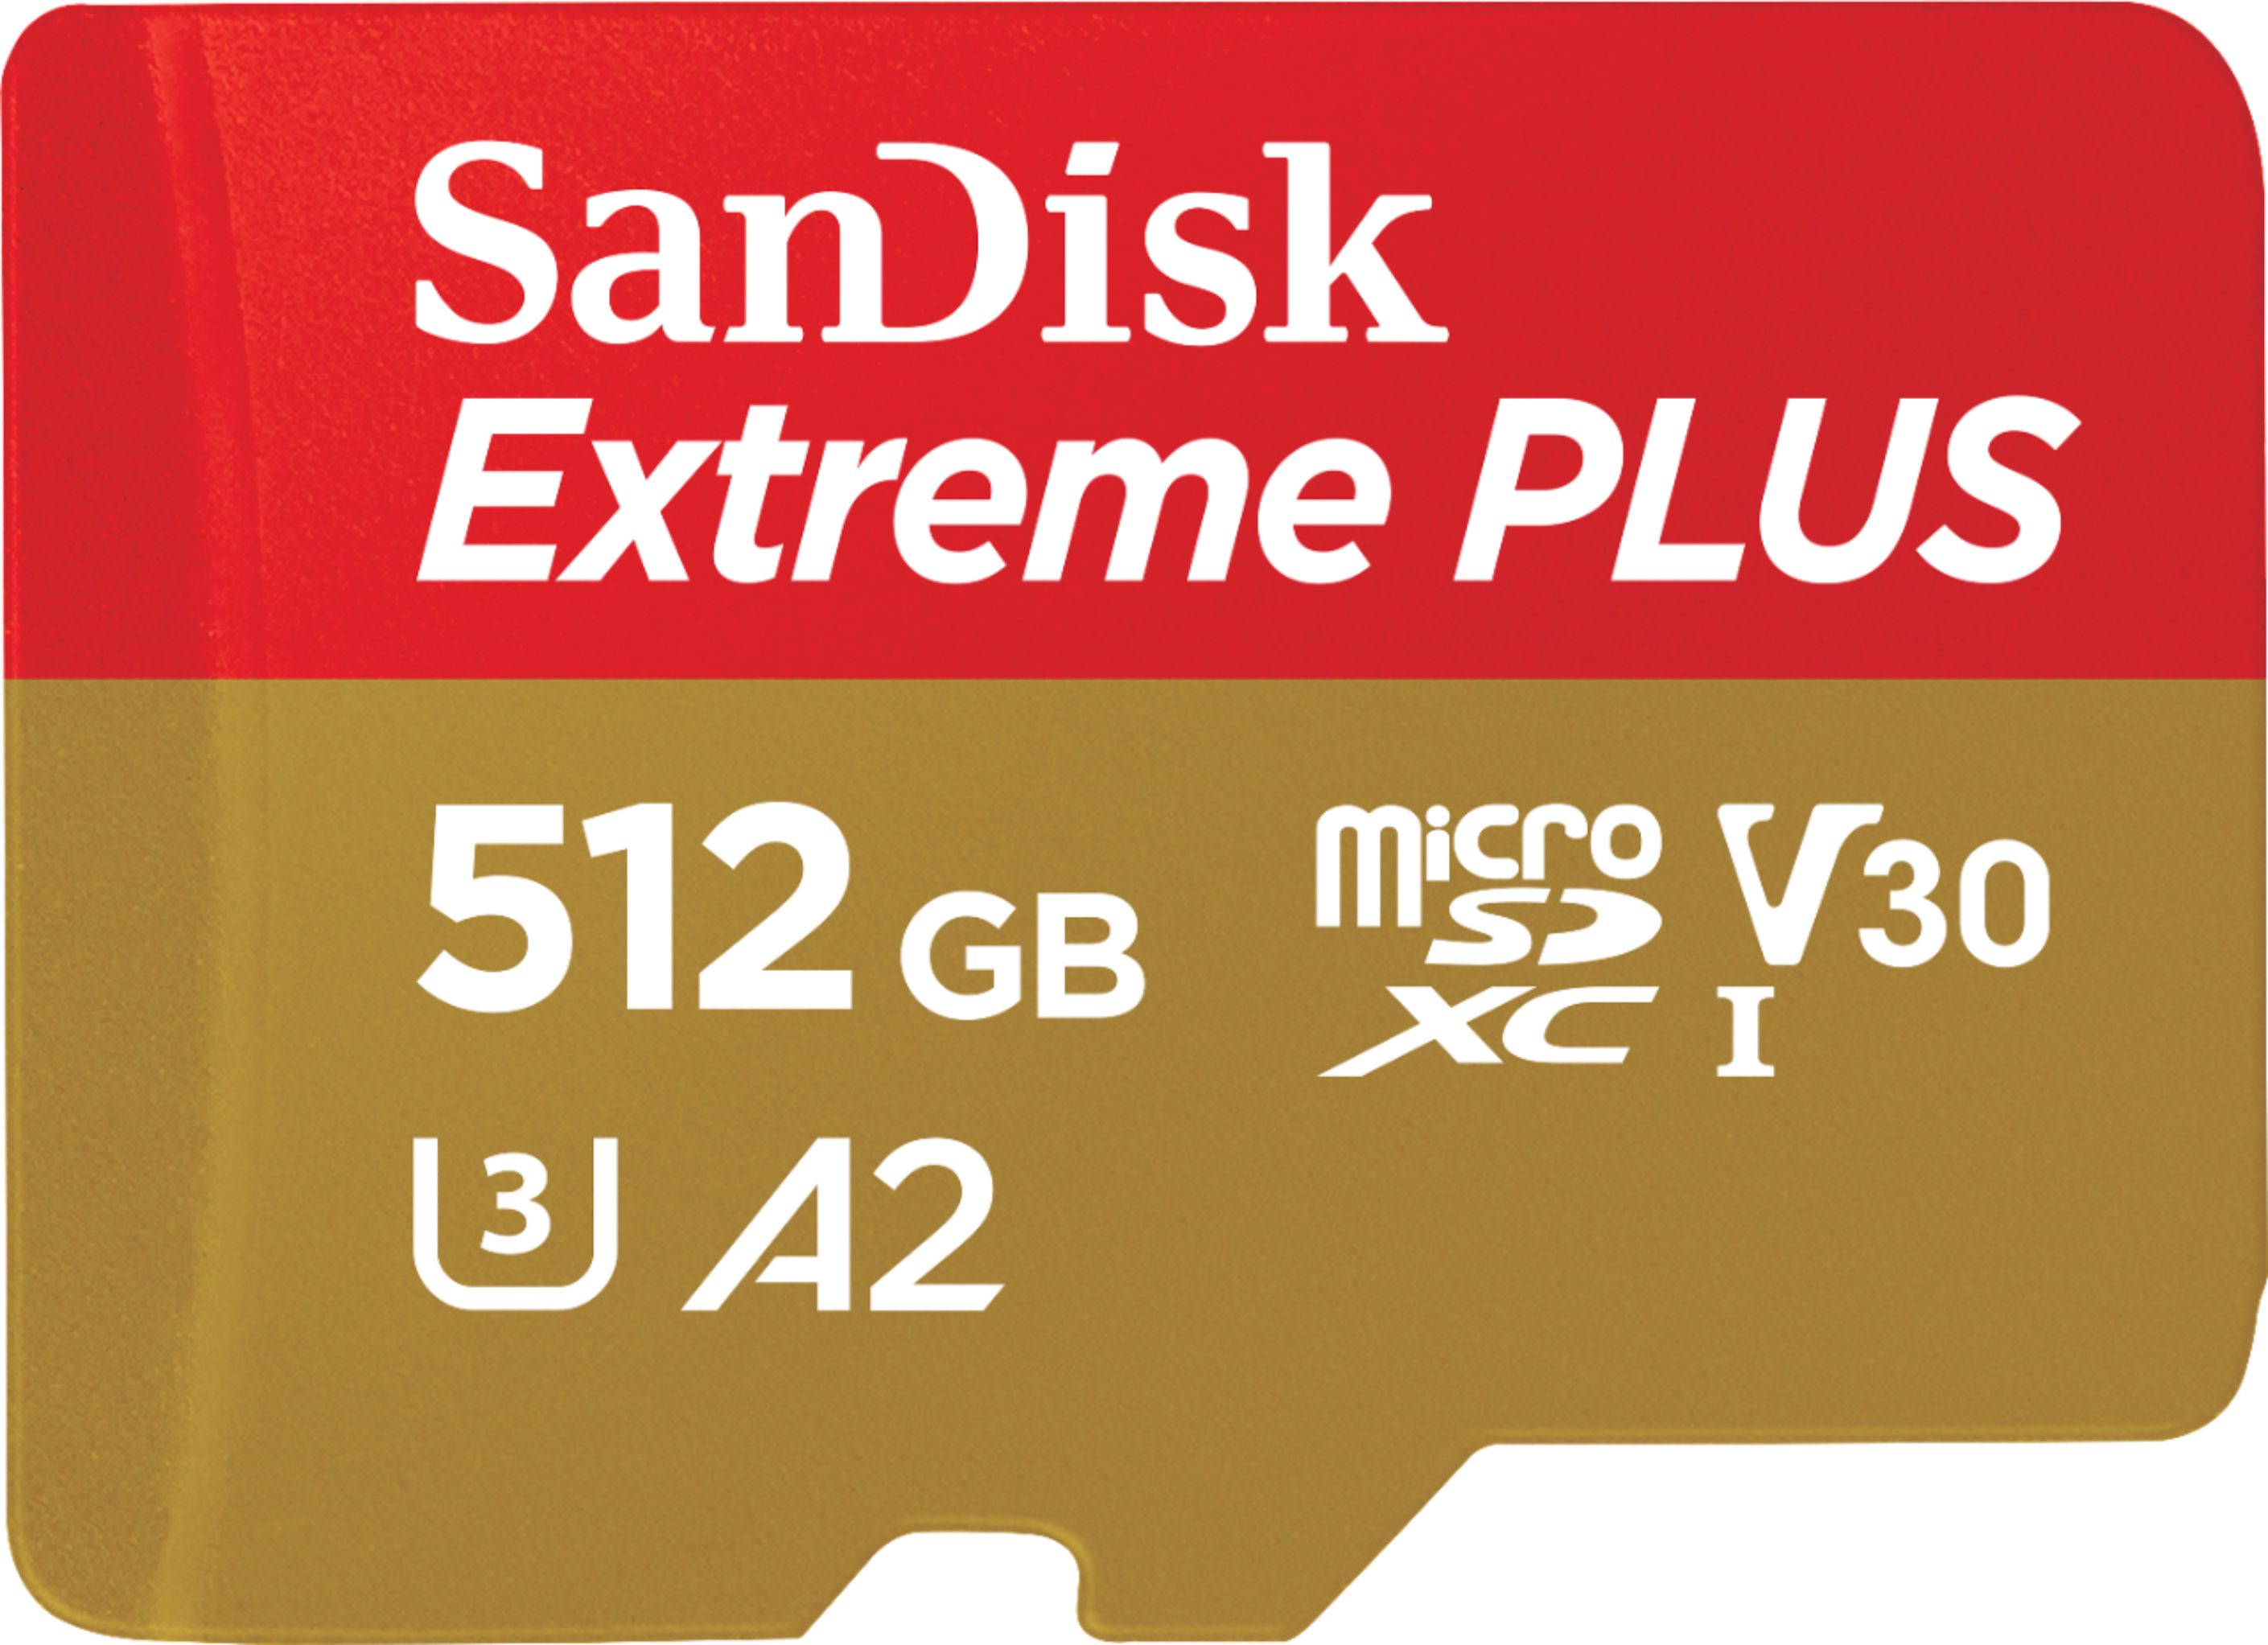 SanDisk - Extreme PLUS 512GB microSDXC UHS-I Memory Card